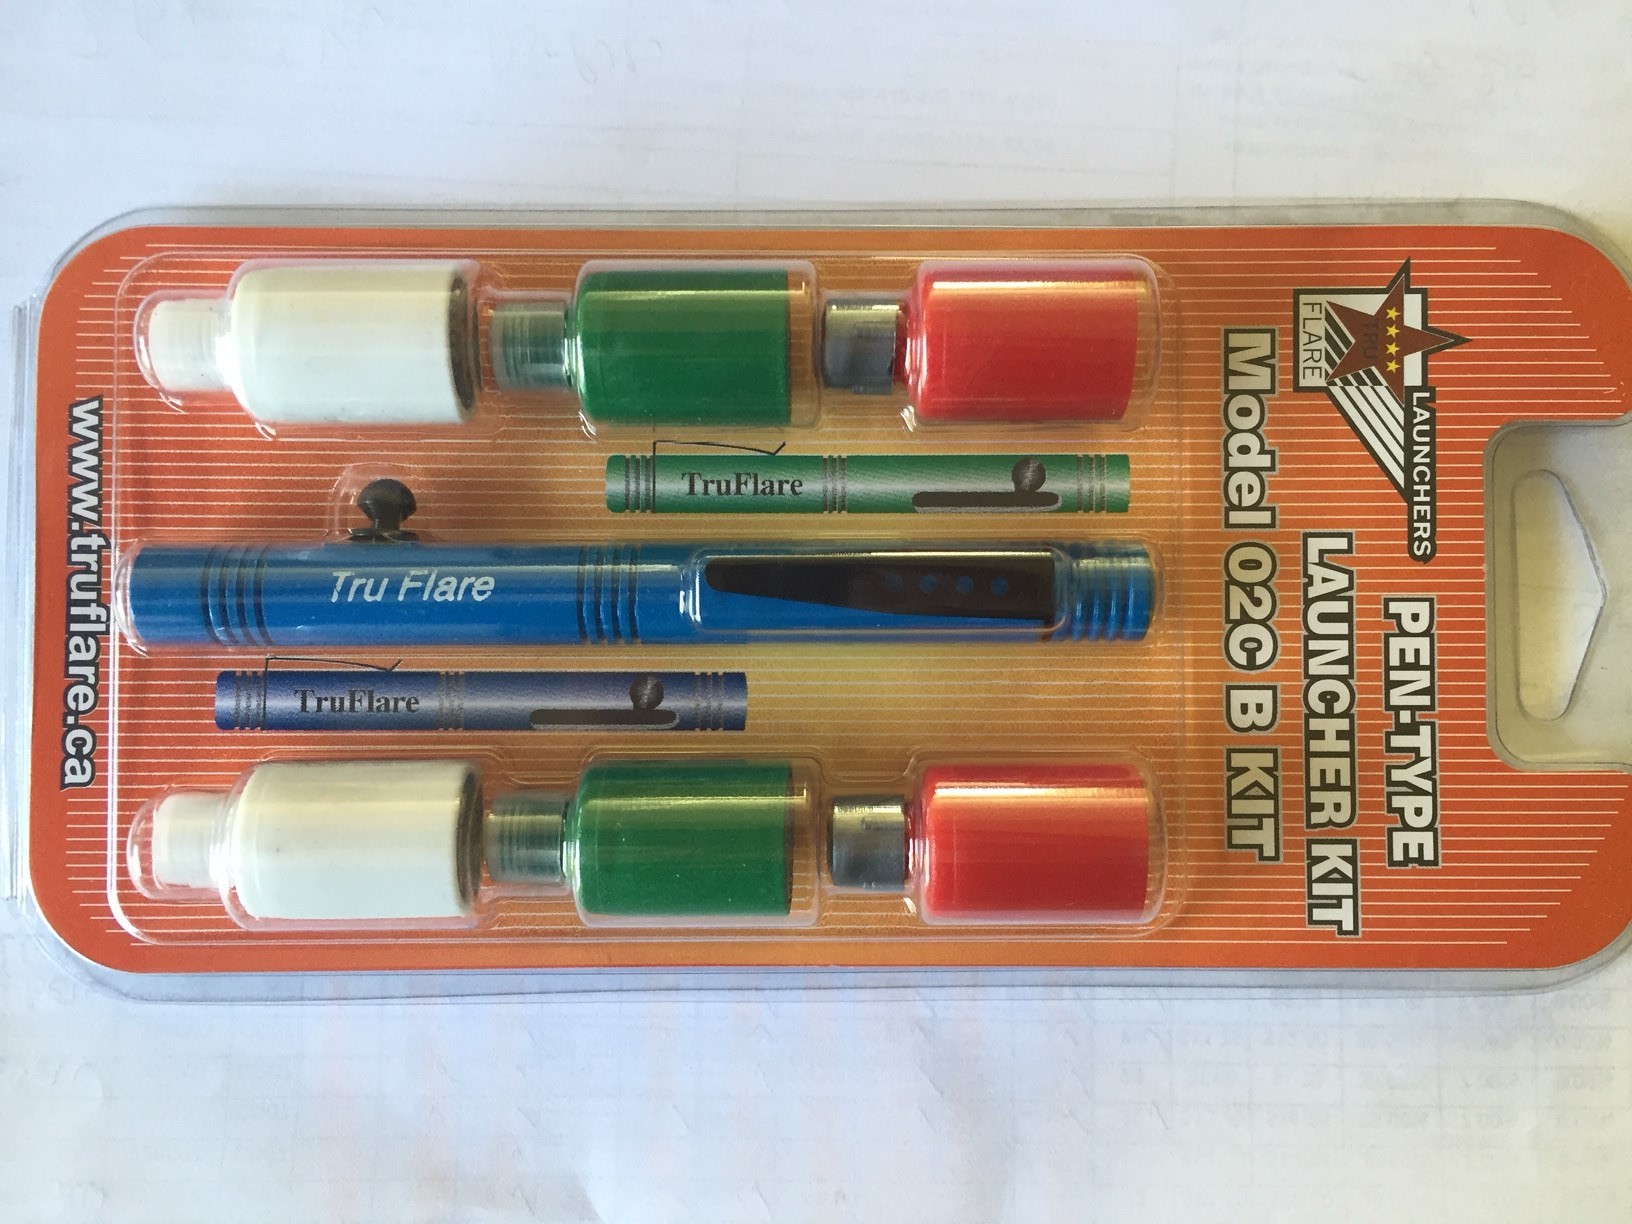 Tru Flare Pen Launcher